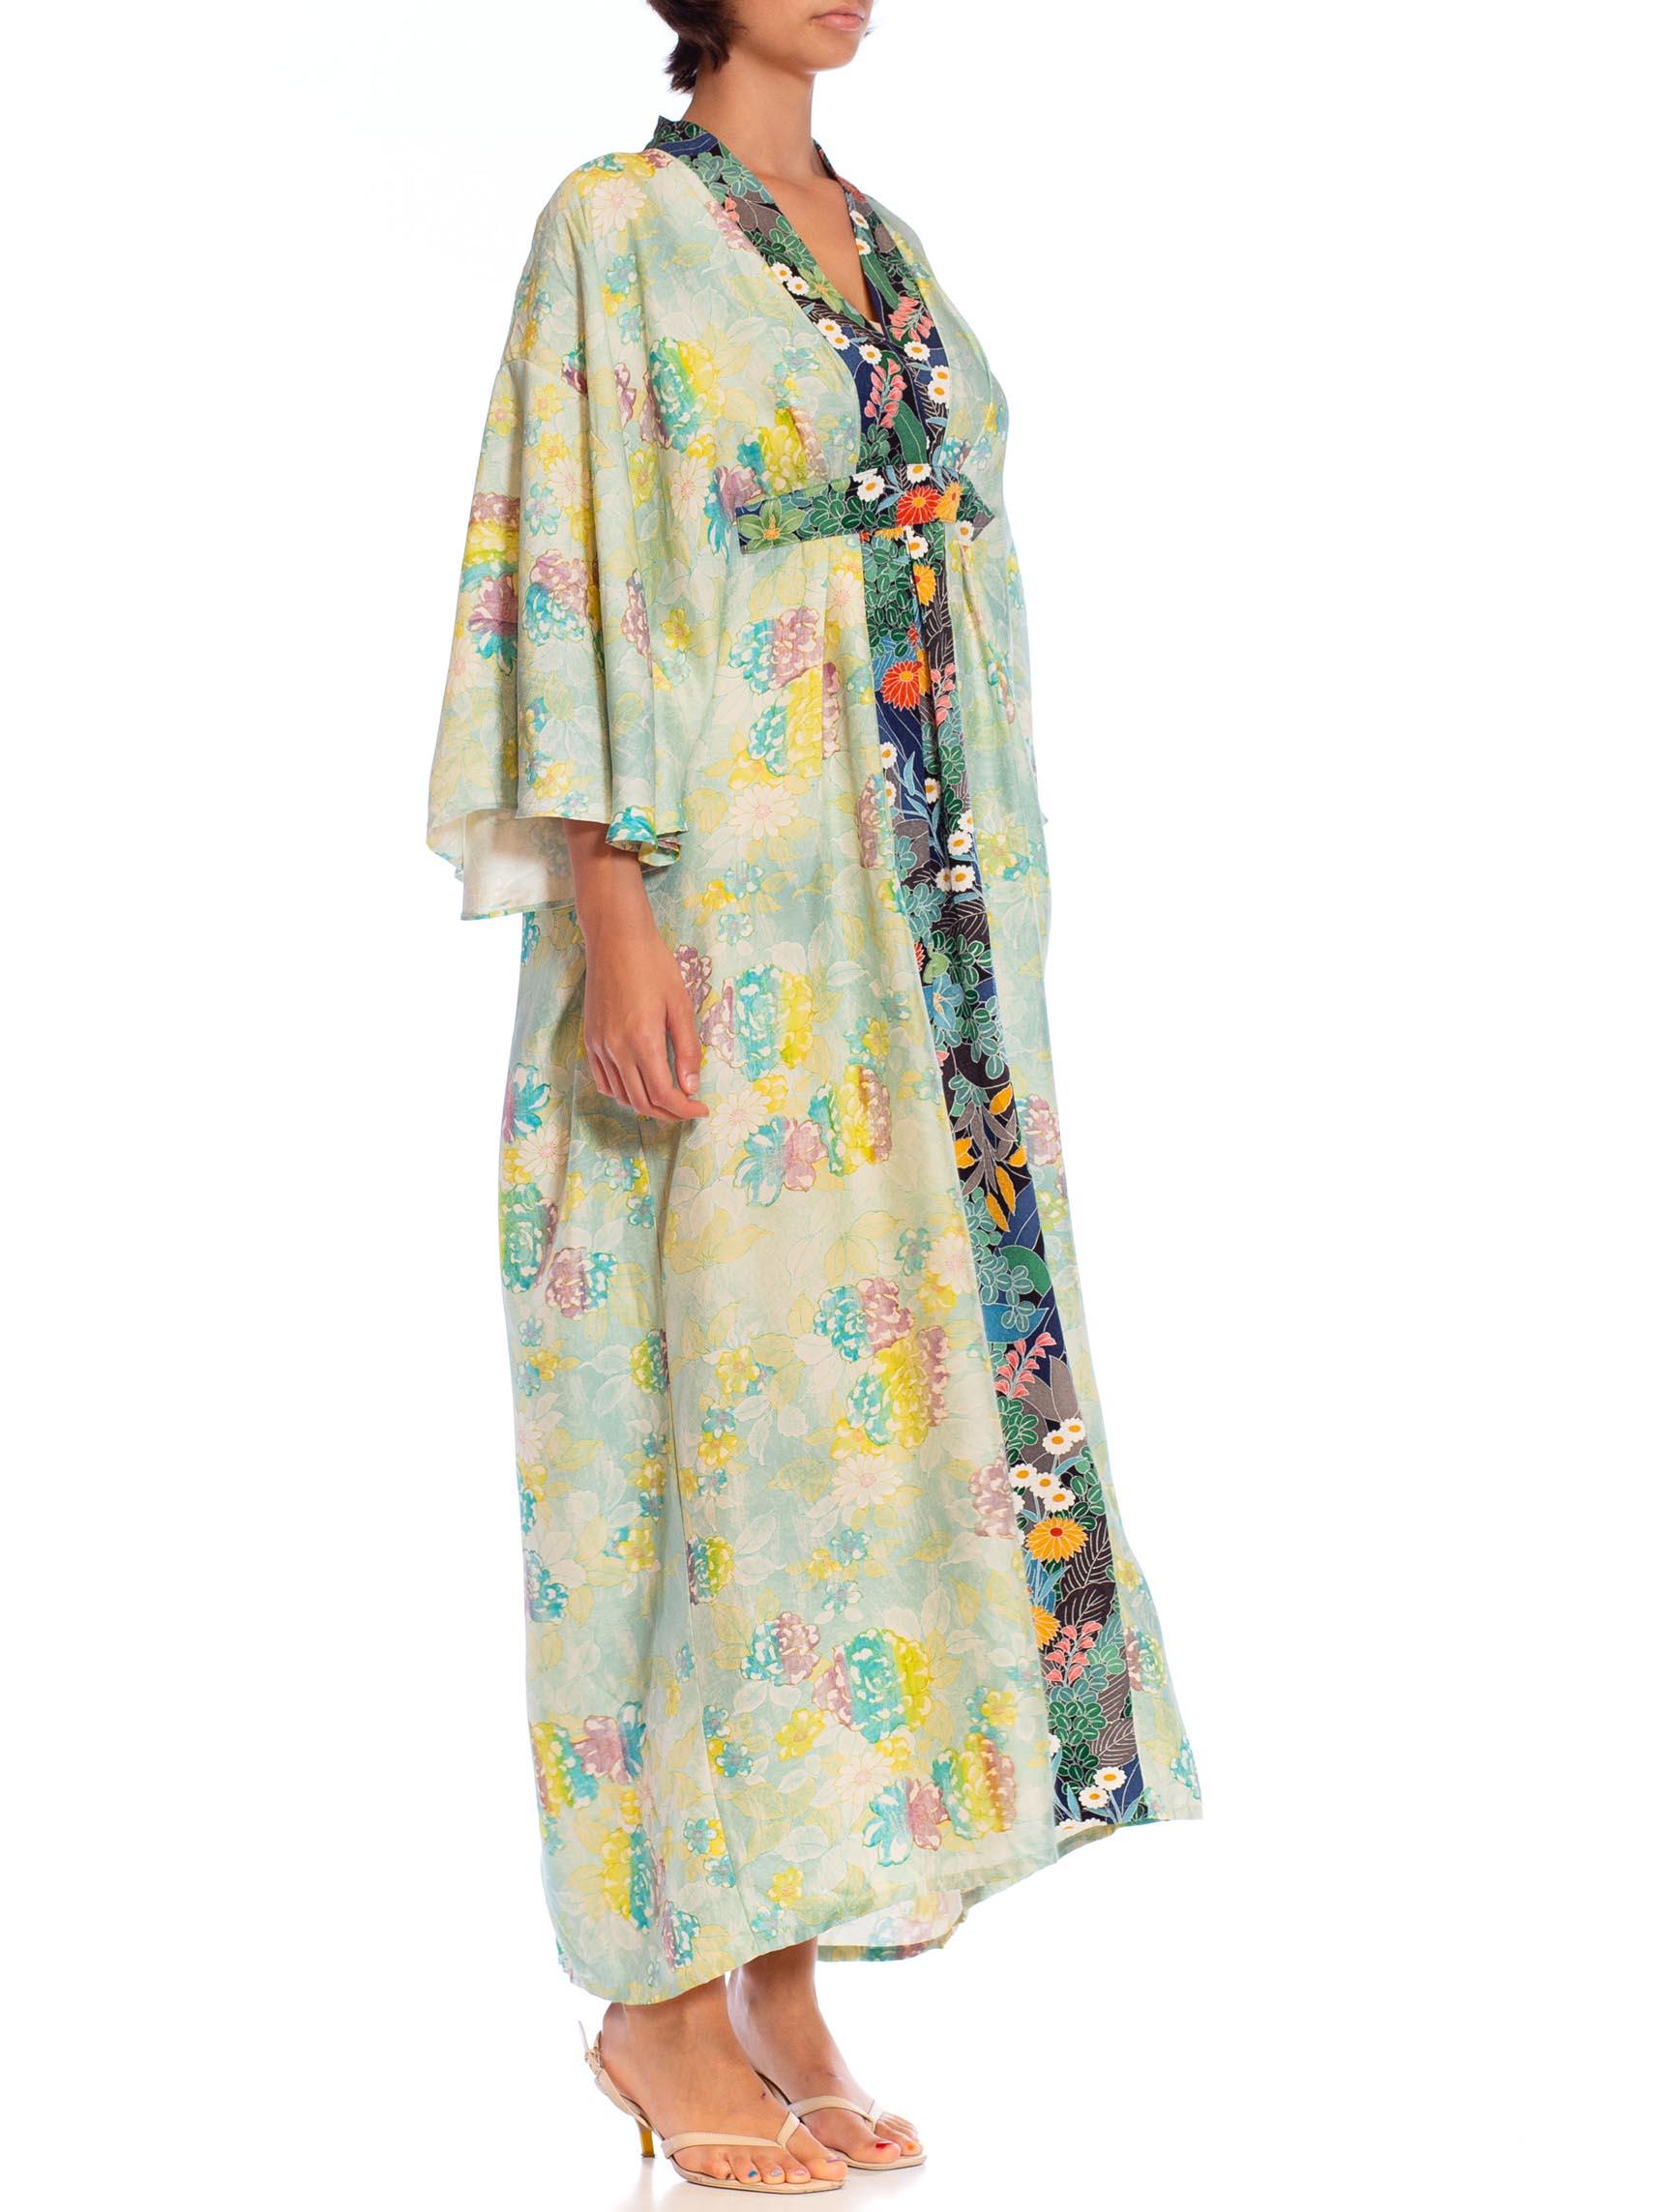 MORPHEW COLLECTION Teal Japanese Kimono Silk Floral Pattern Kaftan Dark Blue An For Sale 1